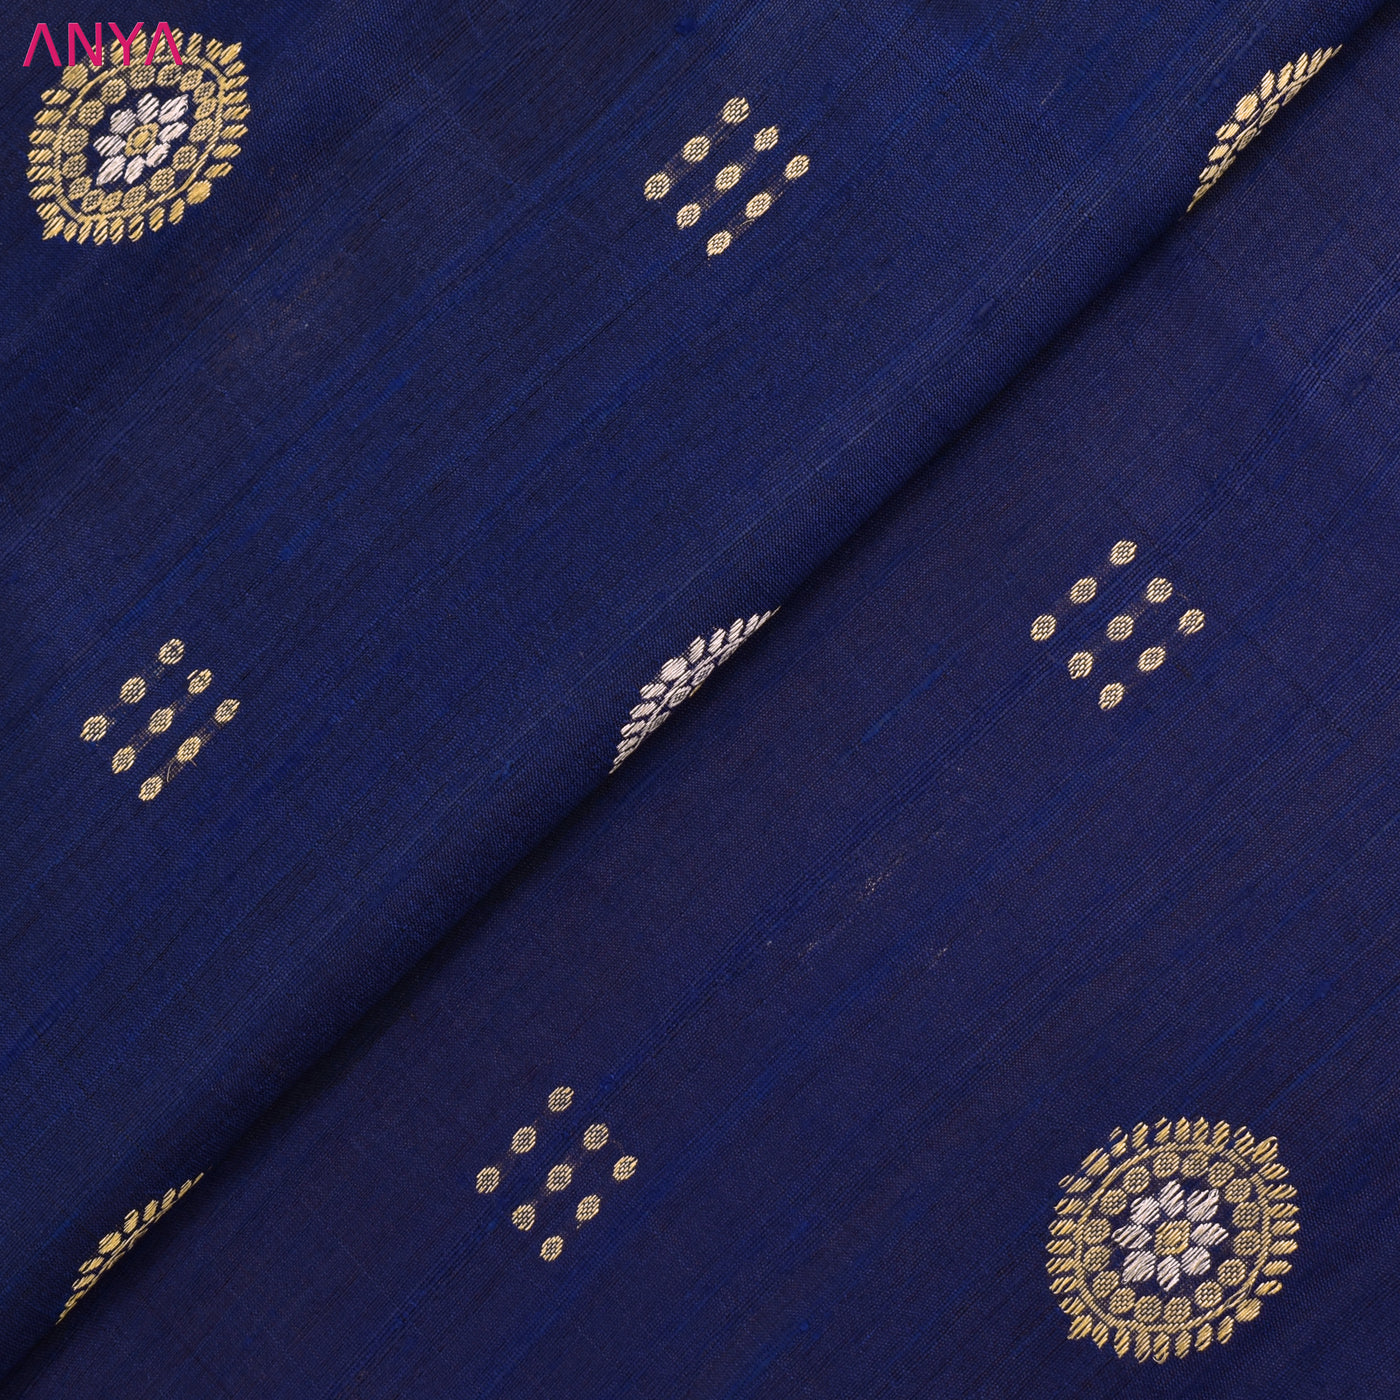 Navy Blue Tussar Raw Silk Fabric with Zari Butta Design